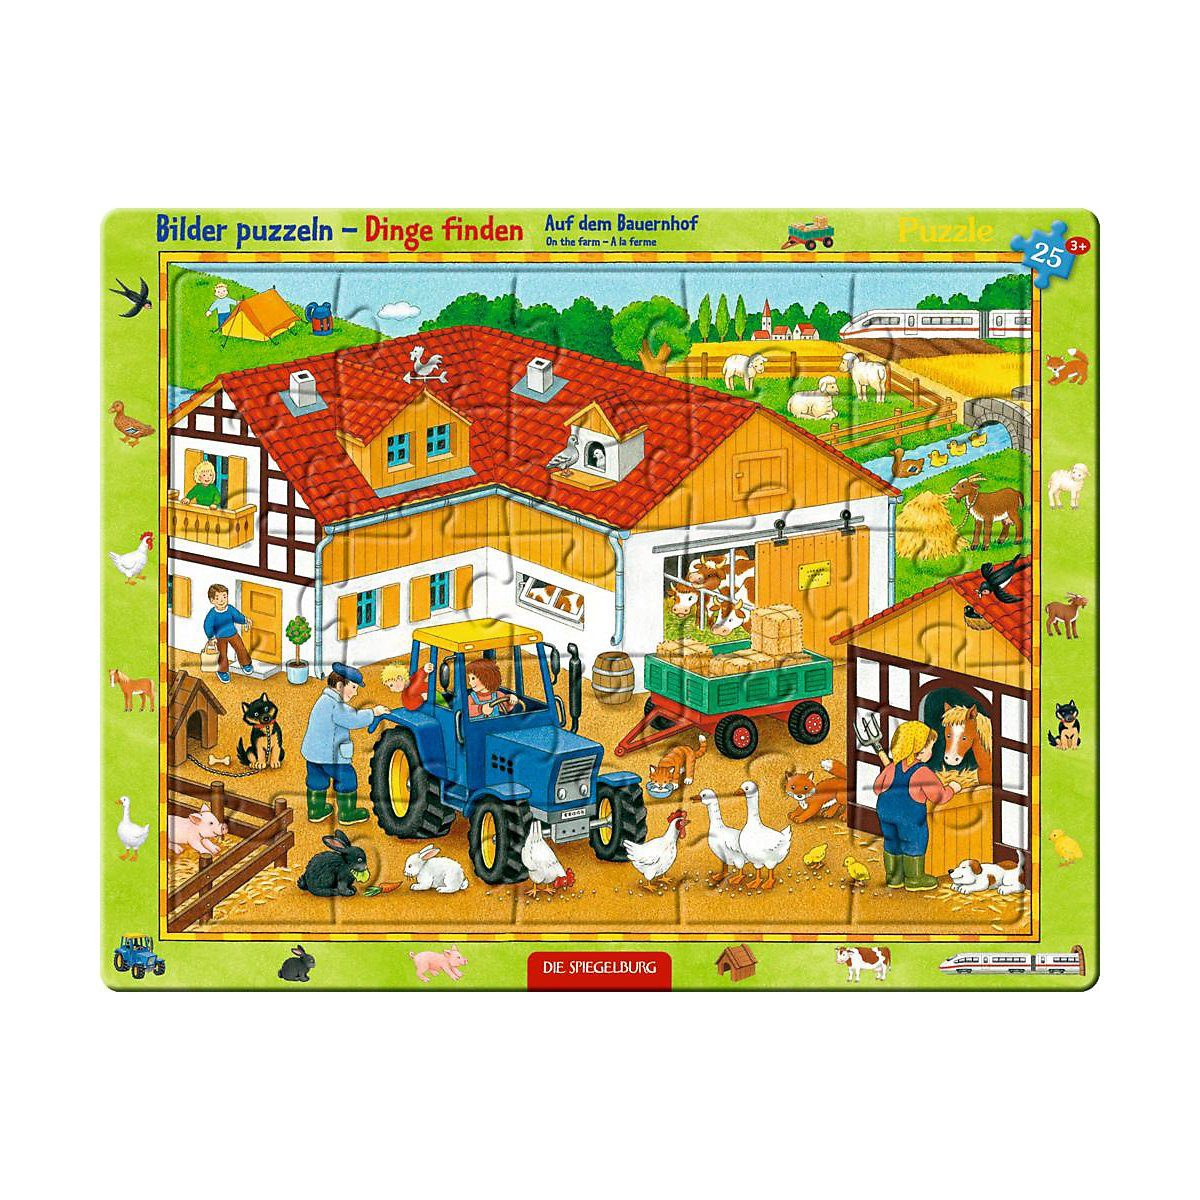 Spiegelburg Puzzle Rahmenpuzzle - Auf dem Bauernhof (25 Teile), Puzzleteile